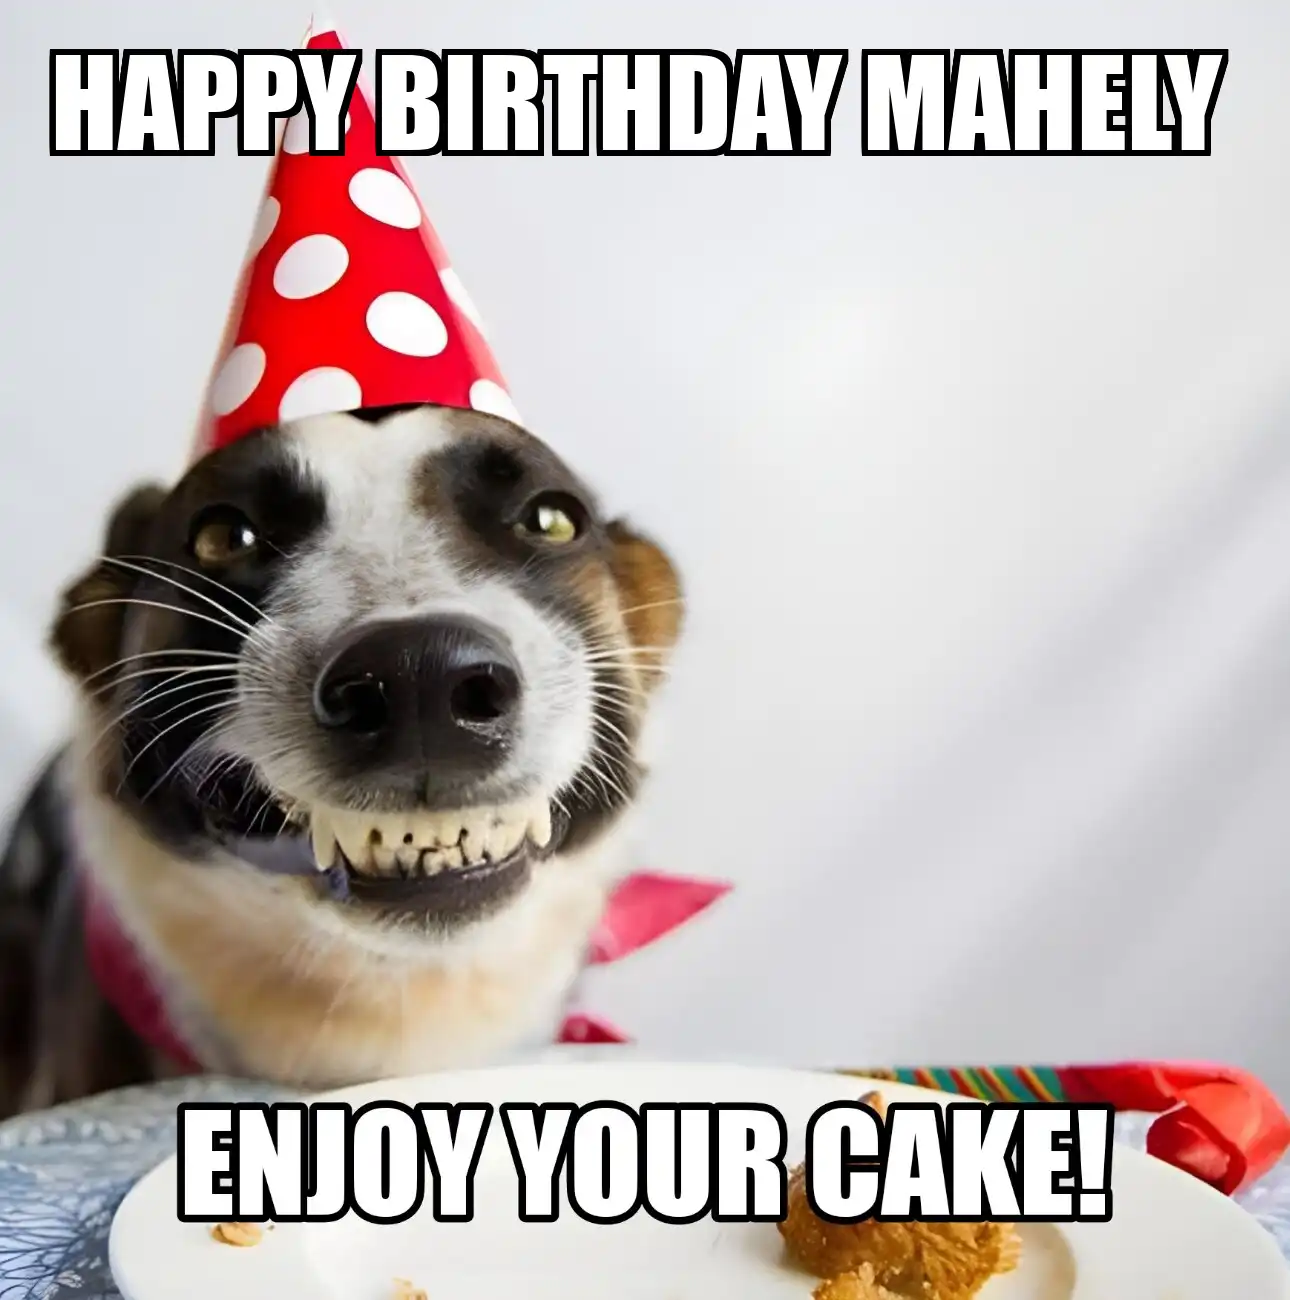 Happy Birthday Mahely Enjoy Your Cake Dog Meme